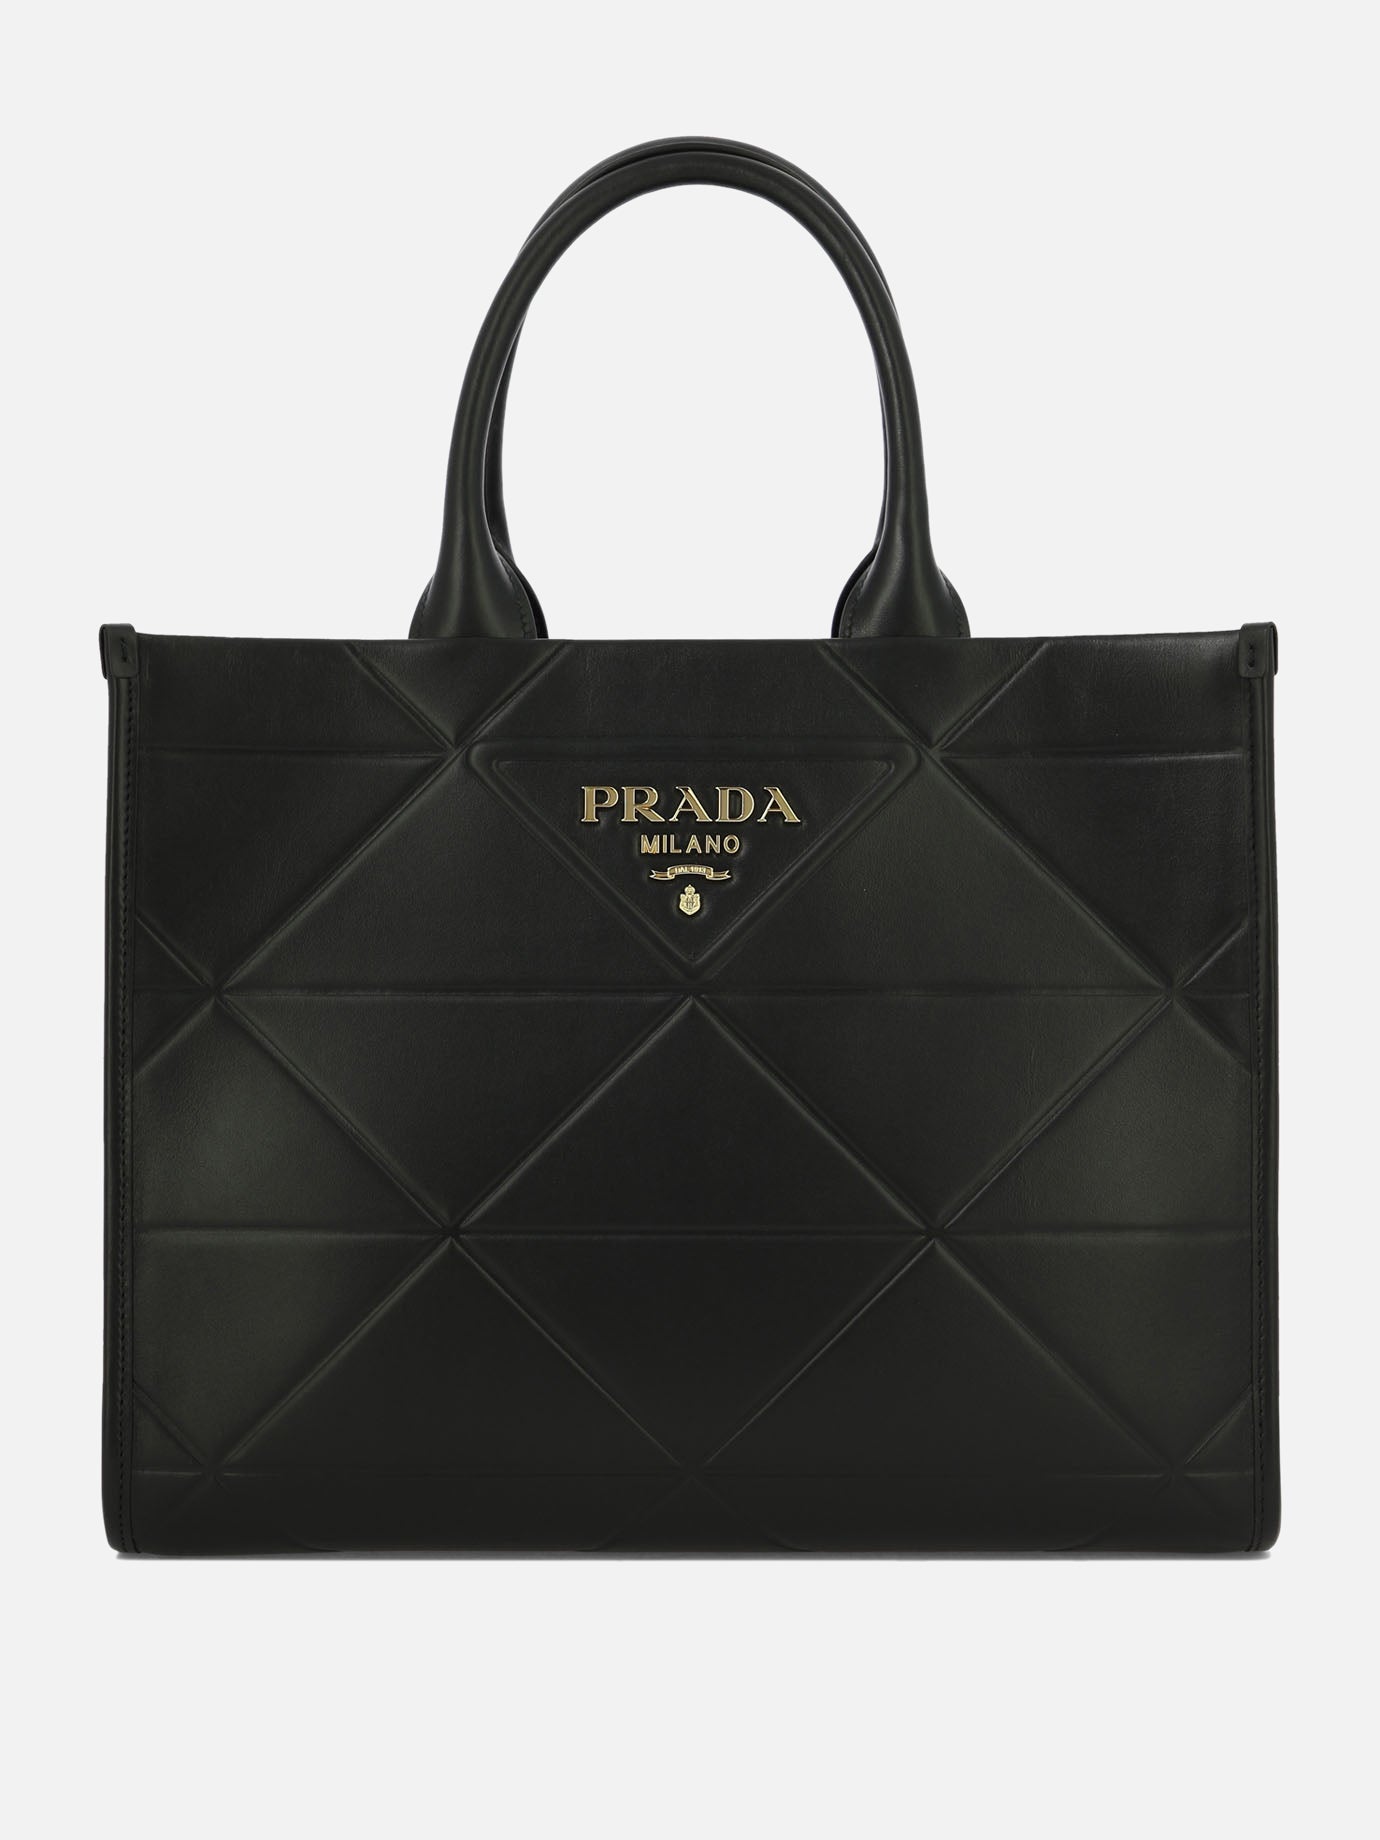 "Prada Symbole" handbag